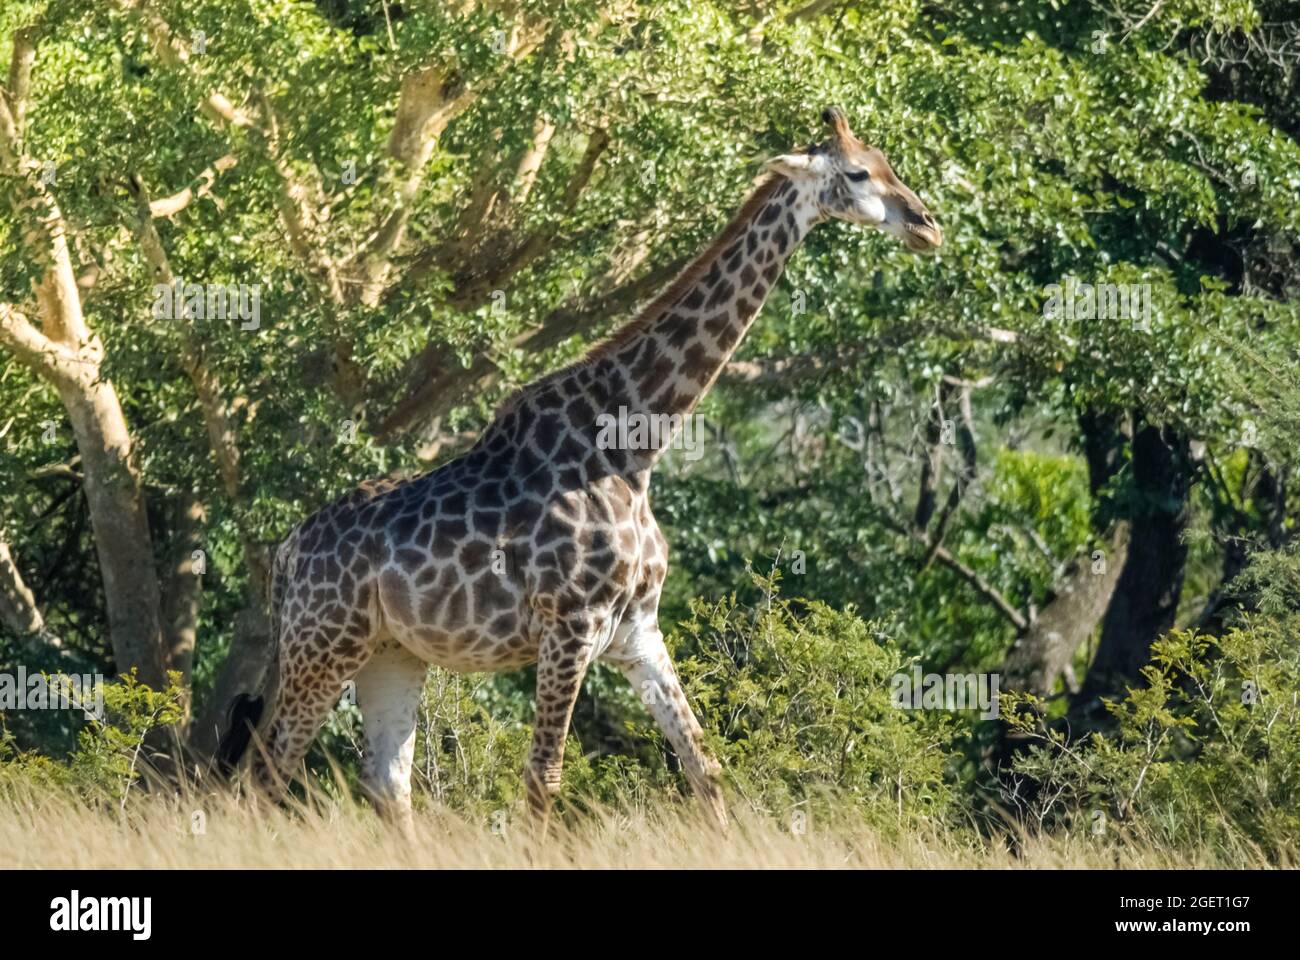 Jiraffa, Giraffa camelopardalis, in African Savannah environment, Kruger National Park, South Africa. Stock Photo